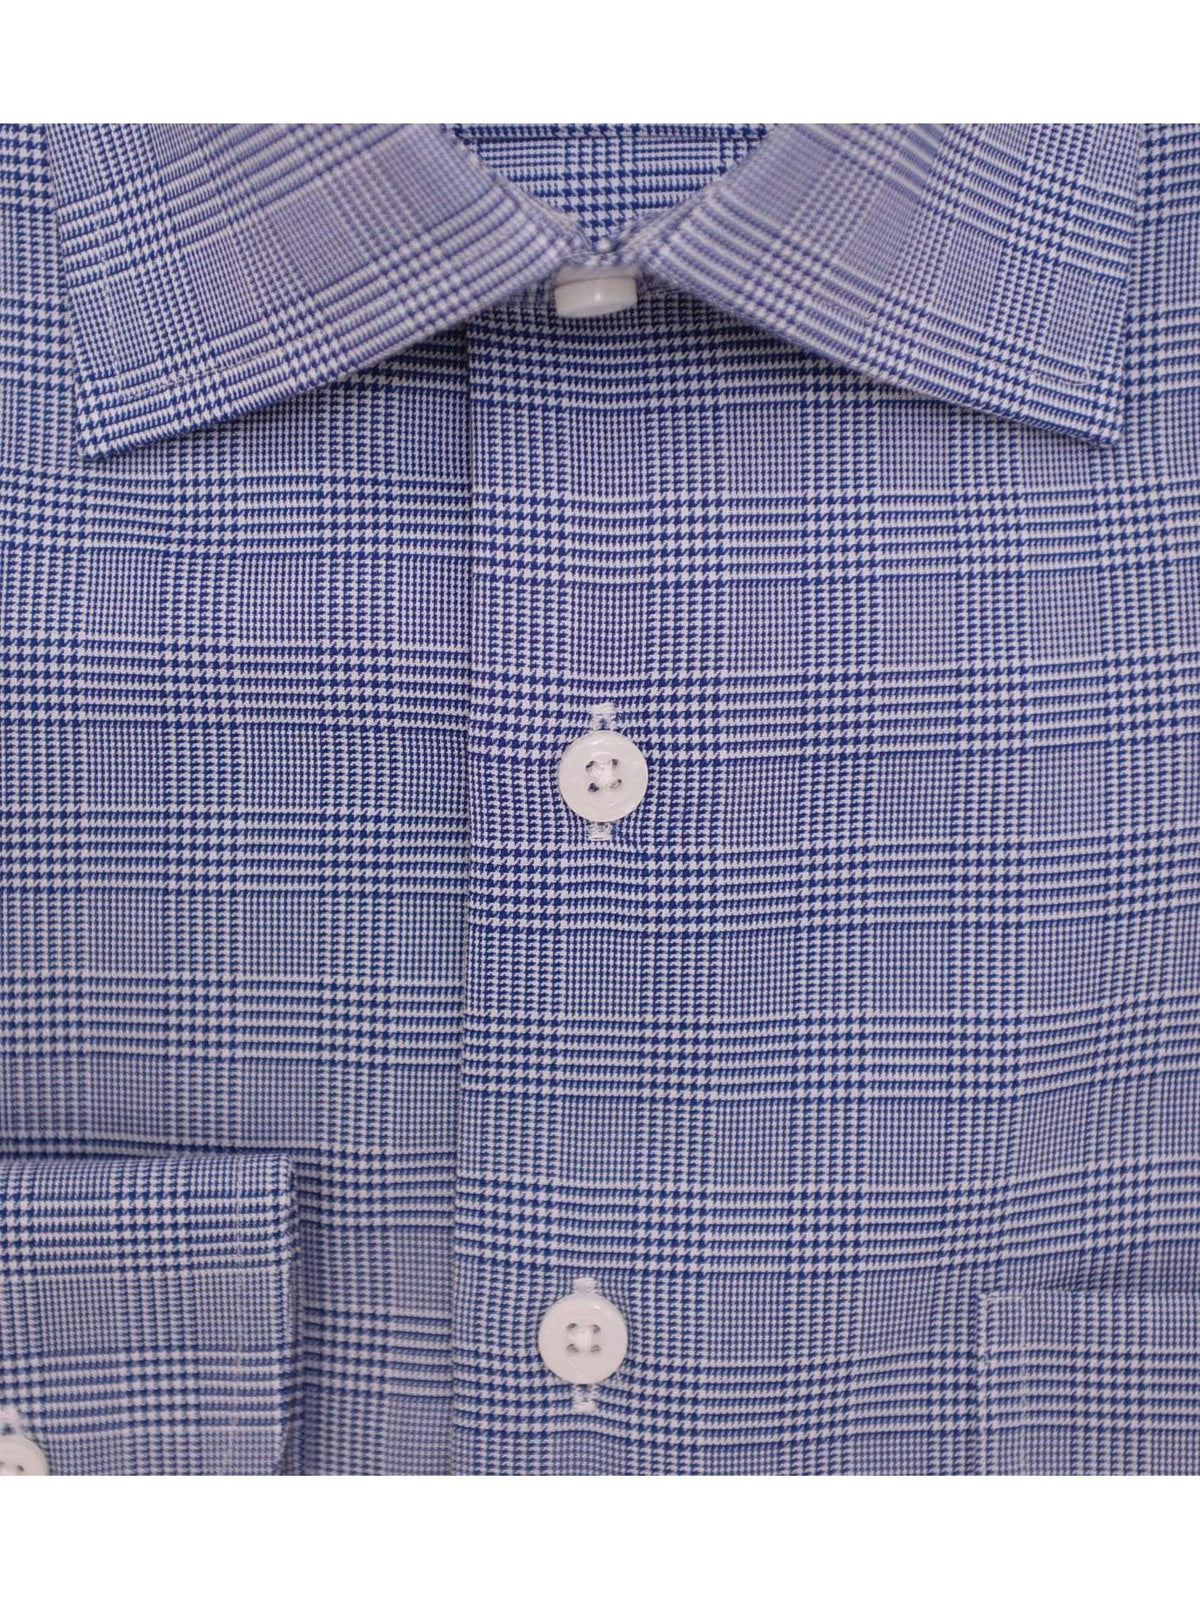 Proper Shirtings SHIRTS Mens Regular Fit Navy Glen Plaid Cotton Spread Collar 2 Ply Cotton Dress Shirt